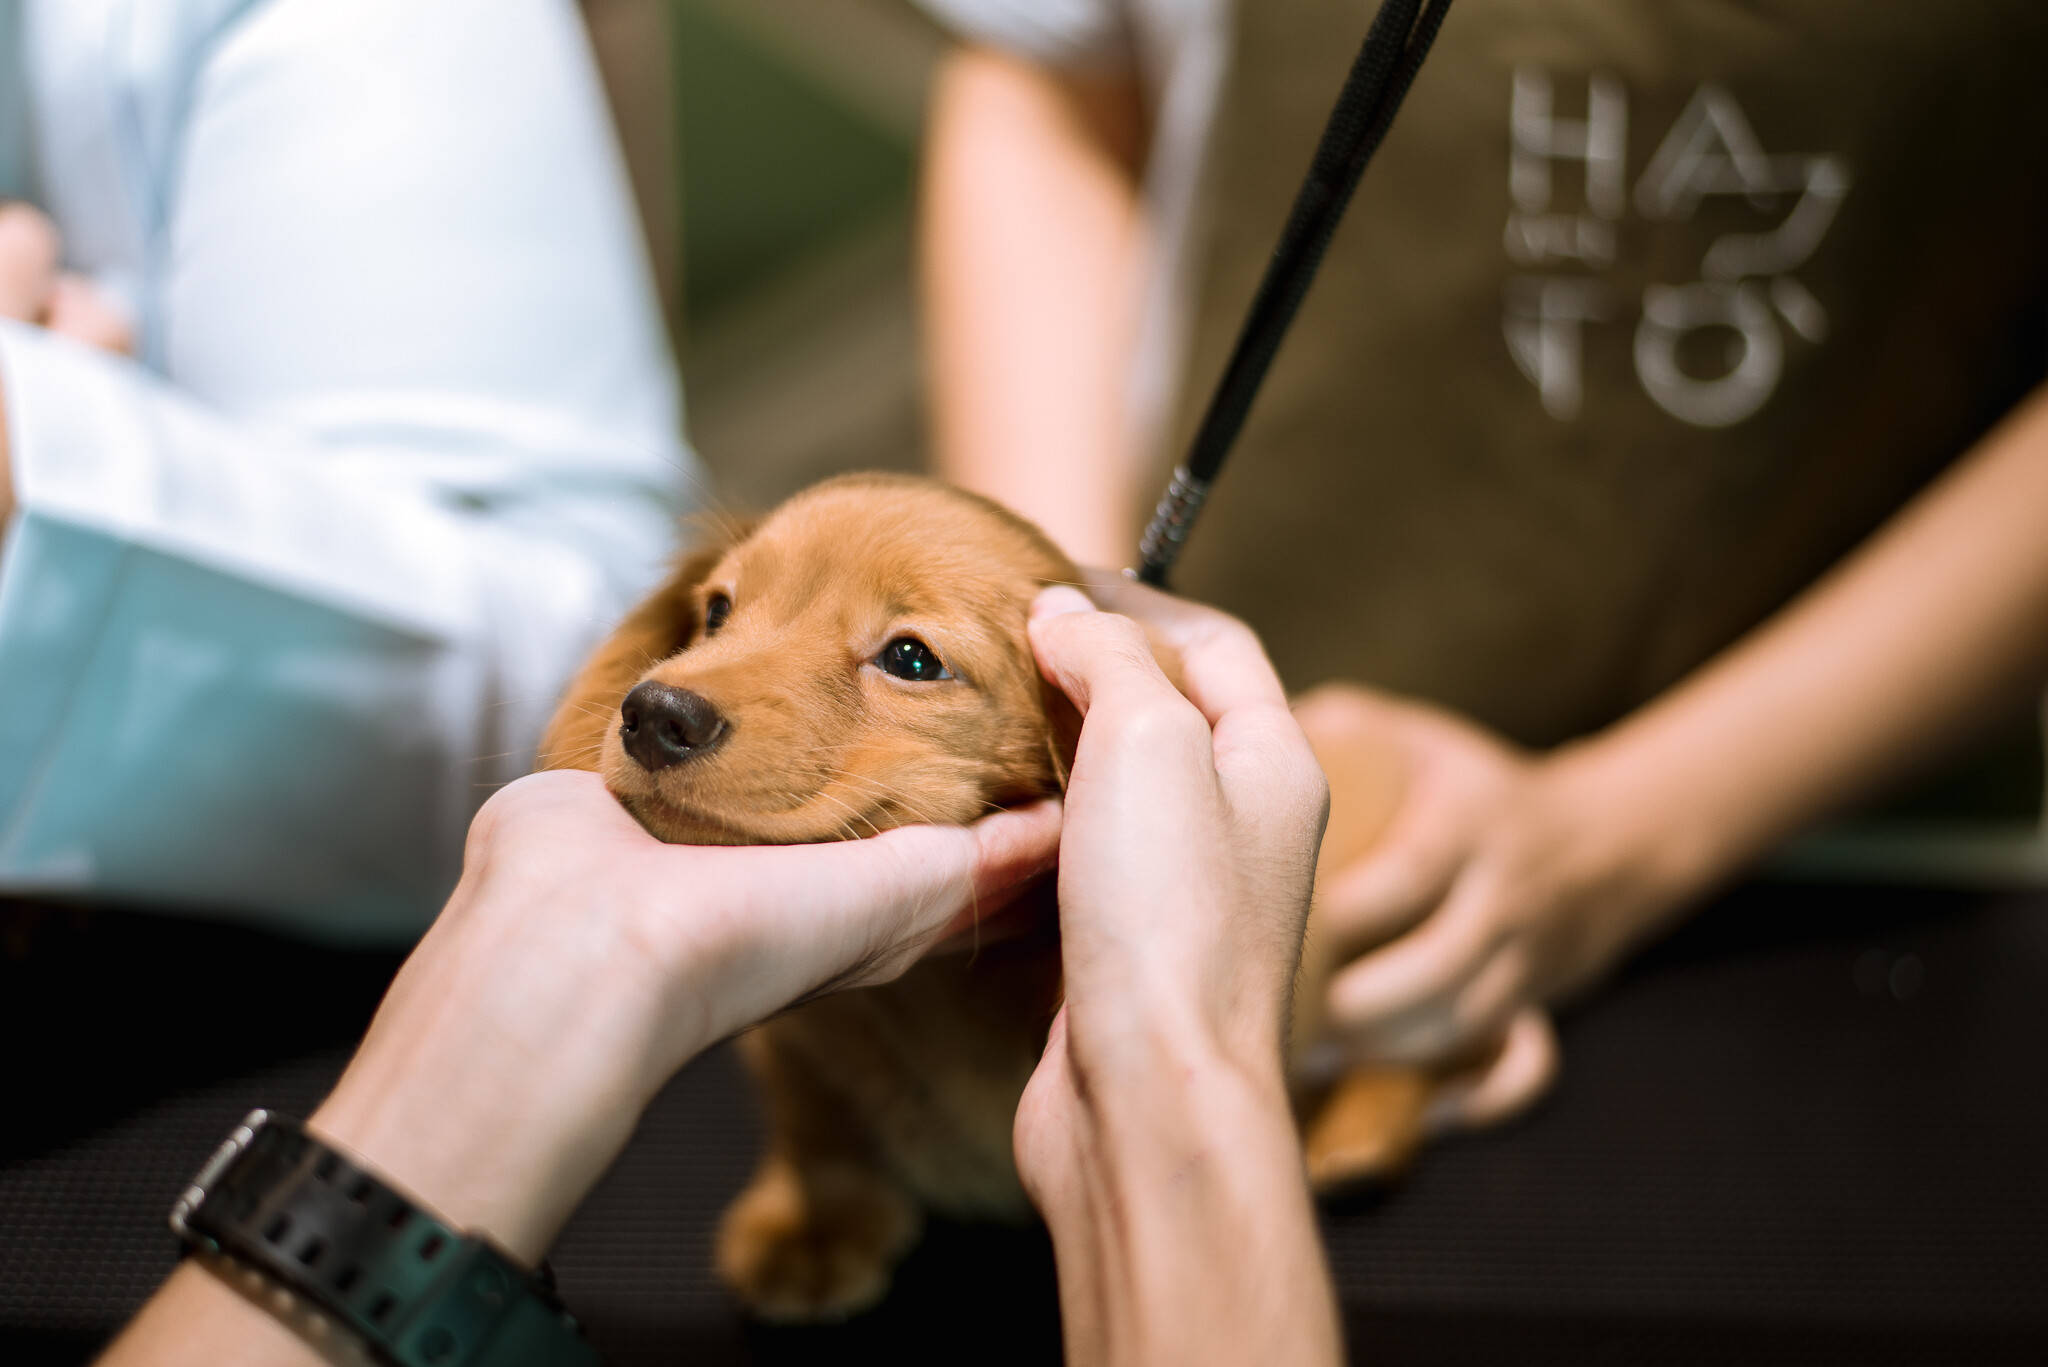 "Hato" คอมมูนิตี้แนวใหม่ เพื่อคนรักสัตว์ ไม่ต้องรอให้ป่วย ก็ดูแลสุขภาพ-เลี่ยงโรคร้ายได้